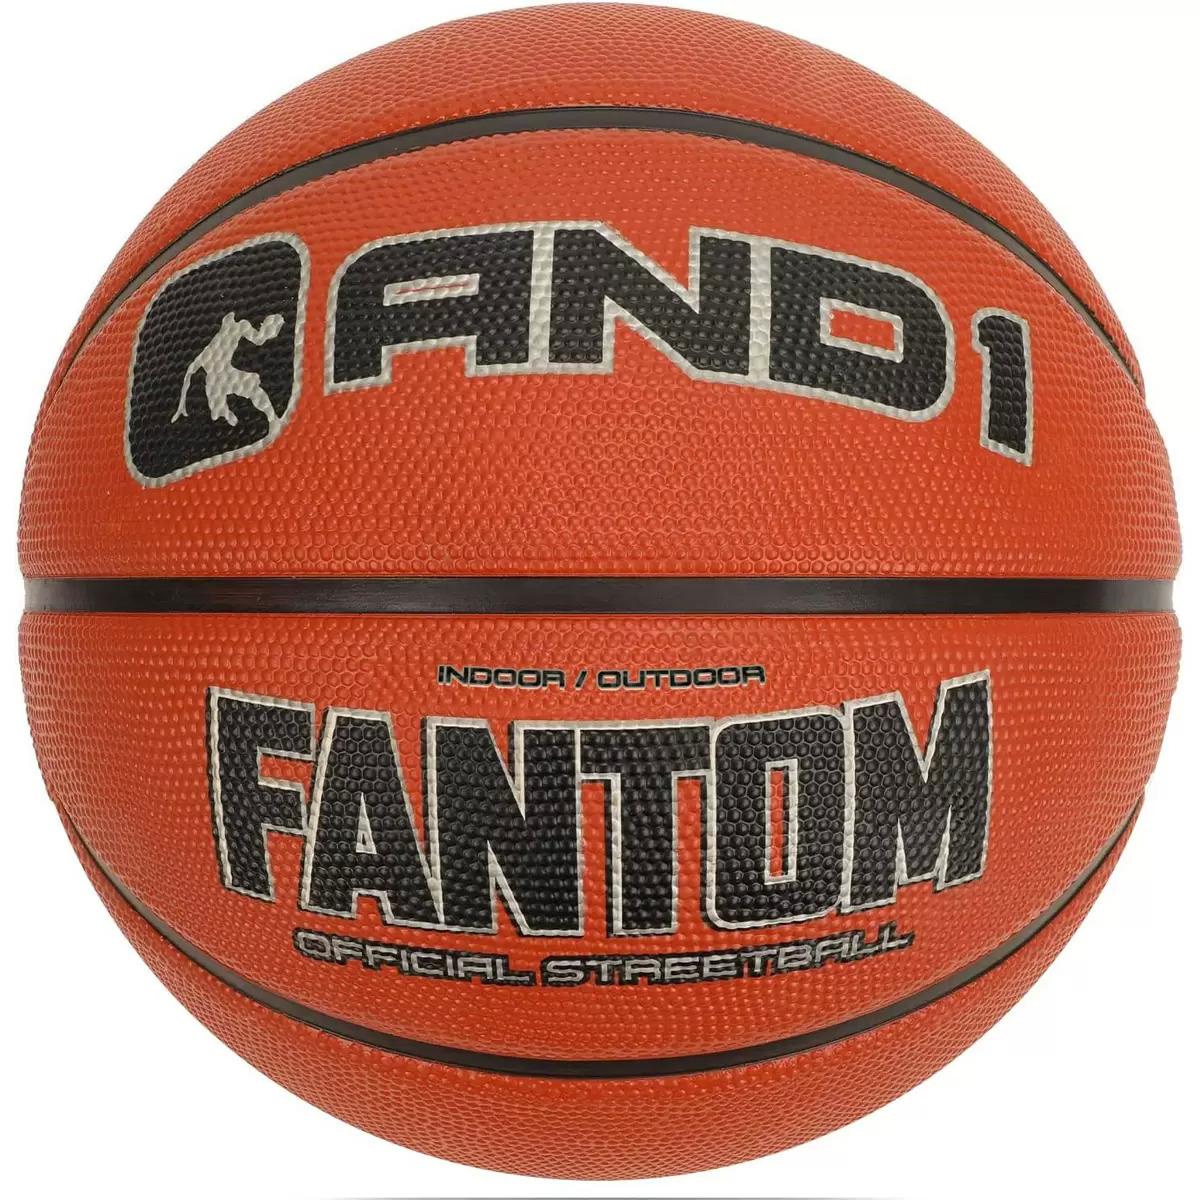 AND1 29.5in Fantom Full Size Street Rubber Basketball for $5